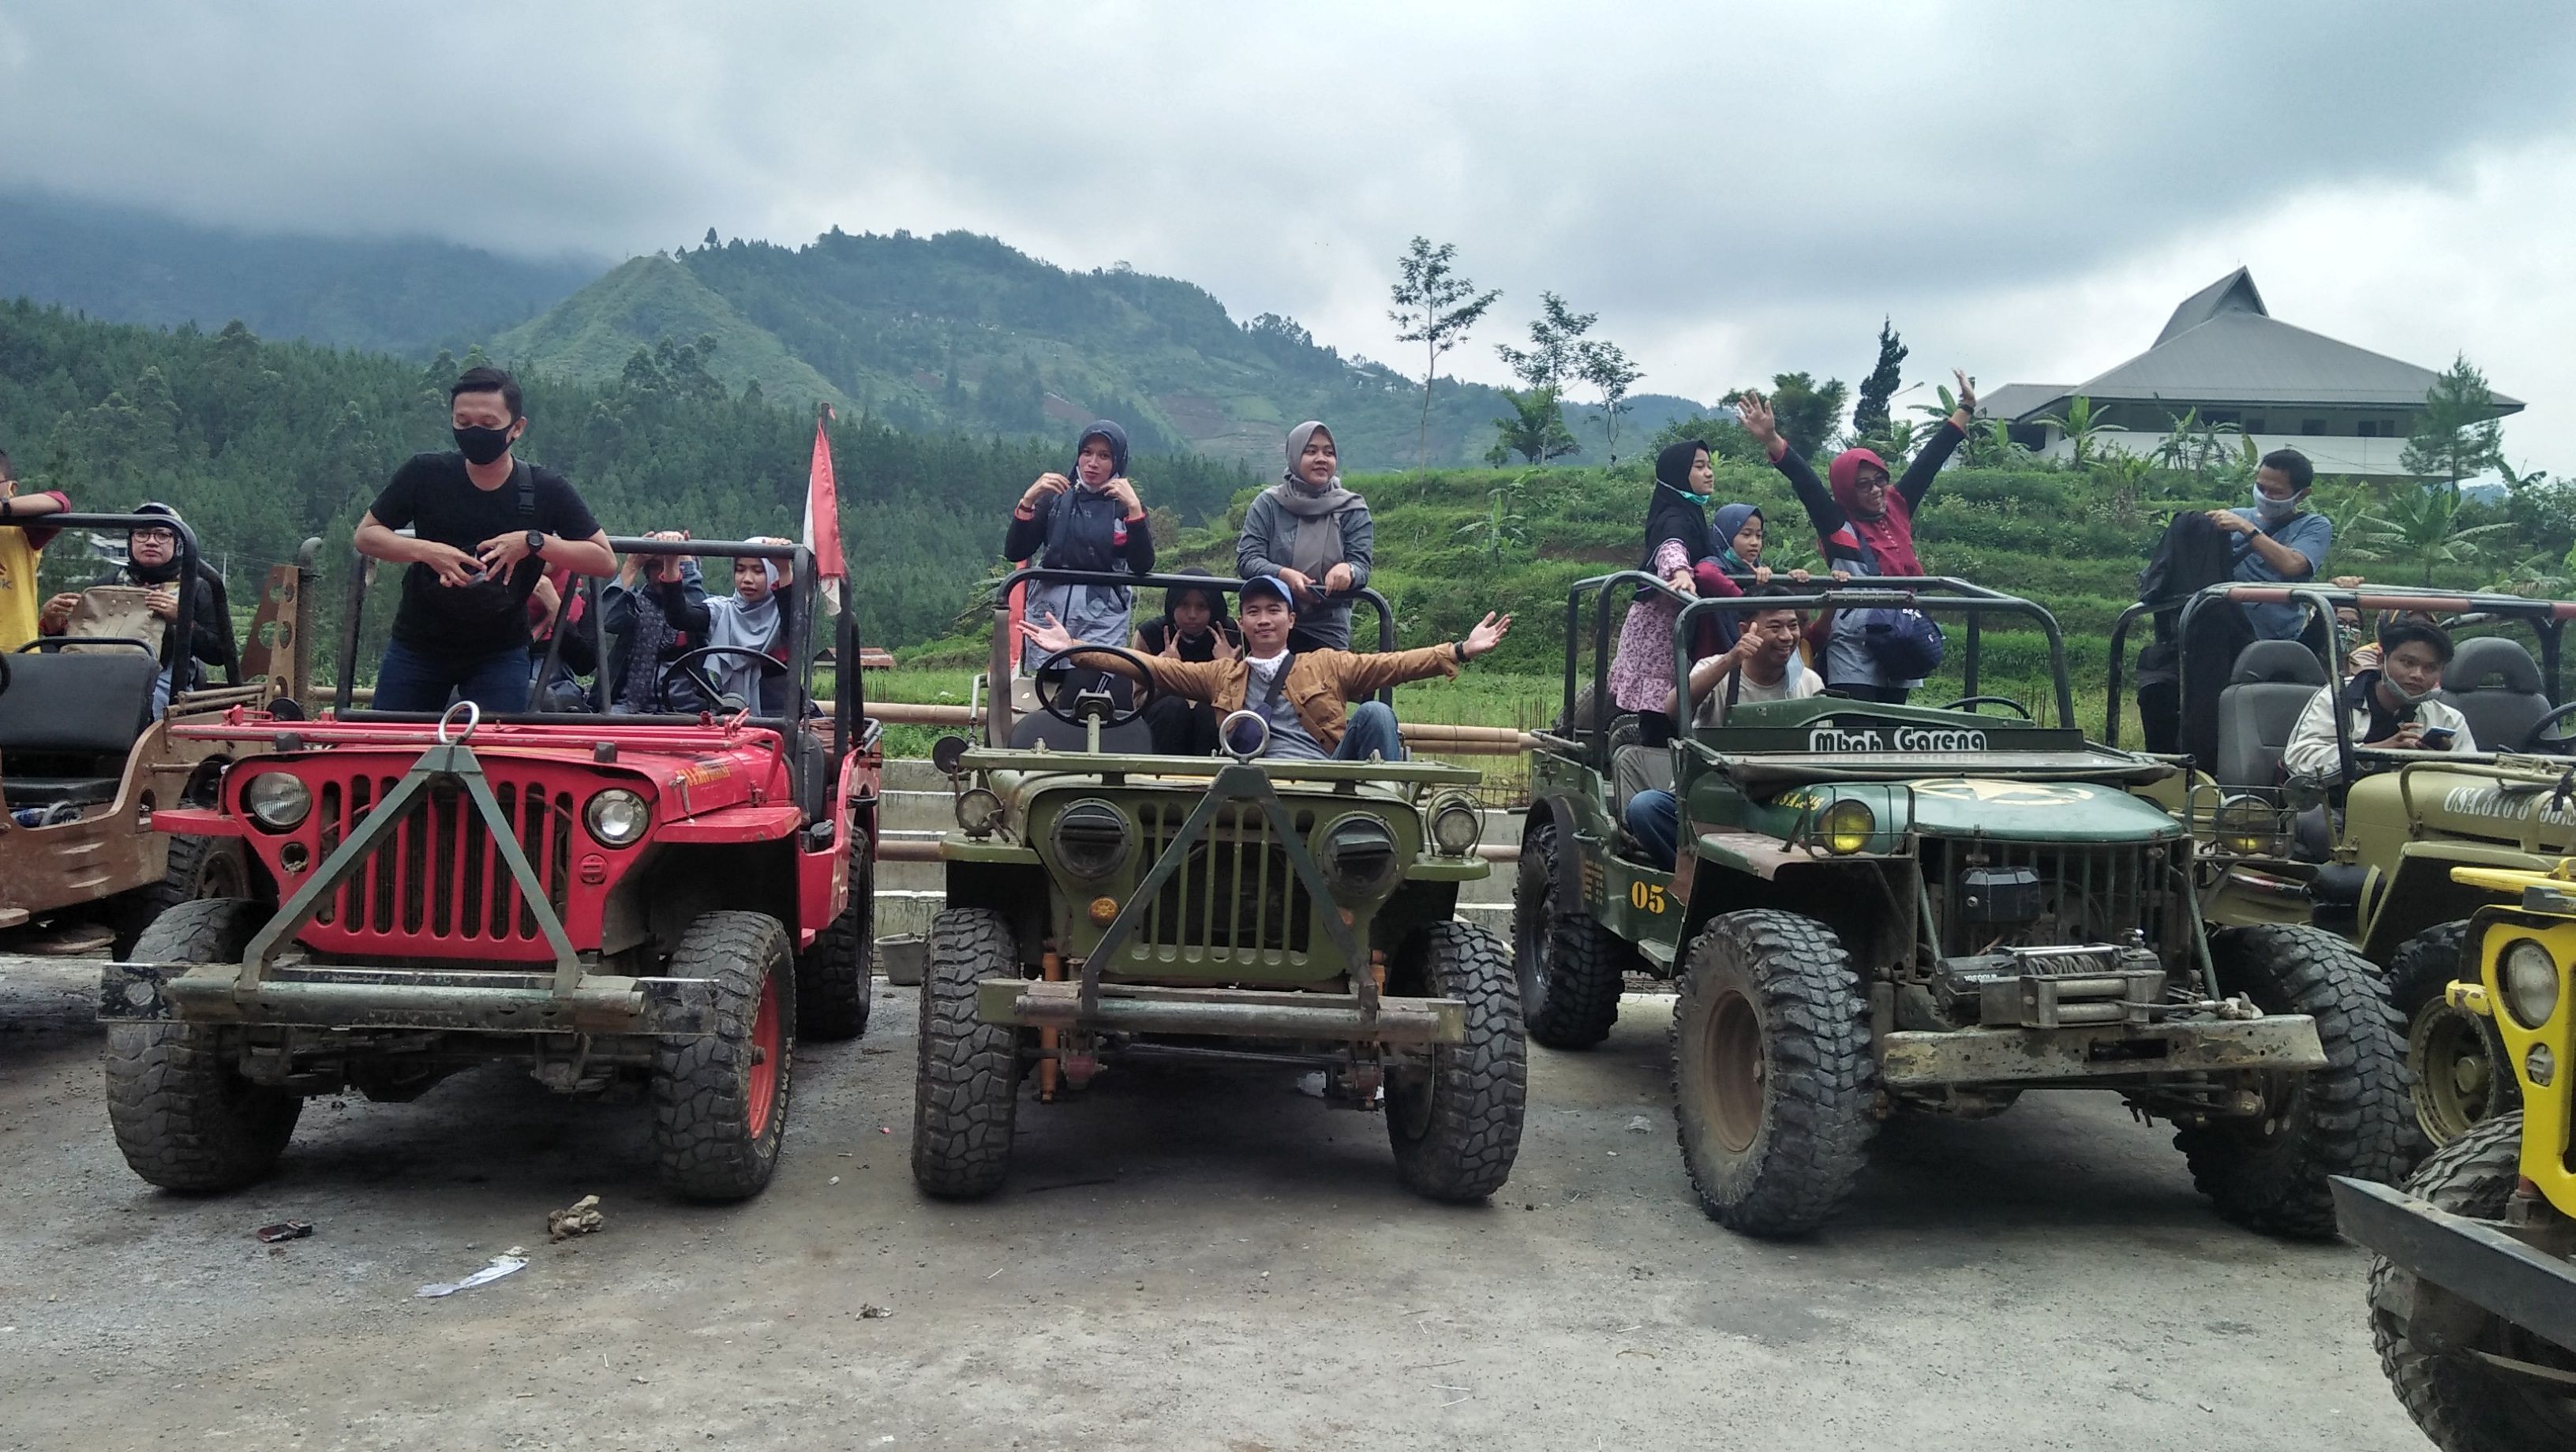 Jeep Wisata Adventure", Alternatif Pilihan Wisata Guci Halaman 1 -  Kompasiana.com